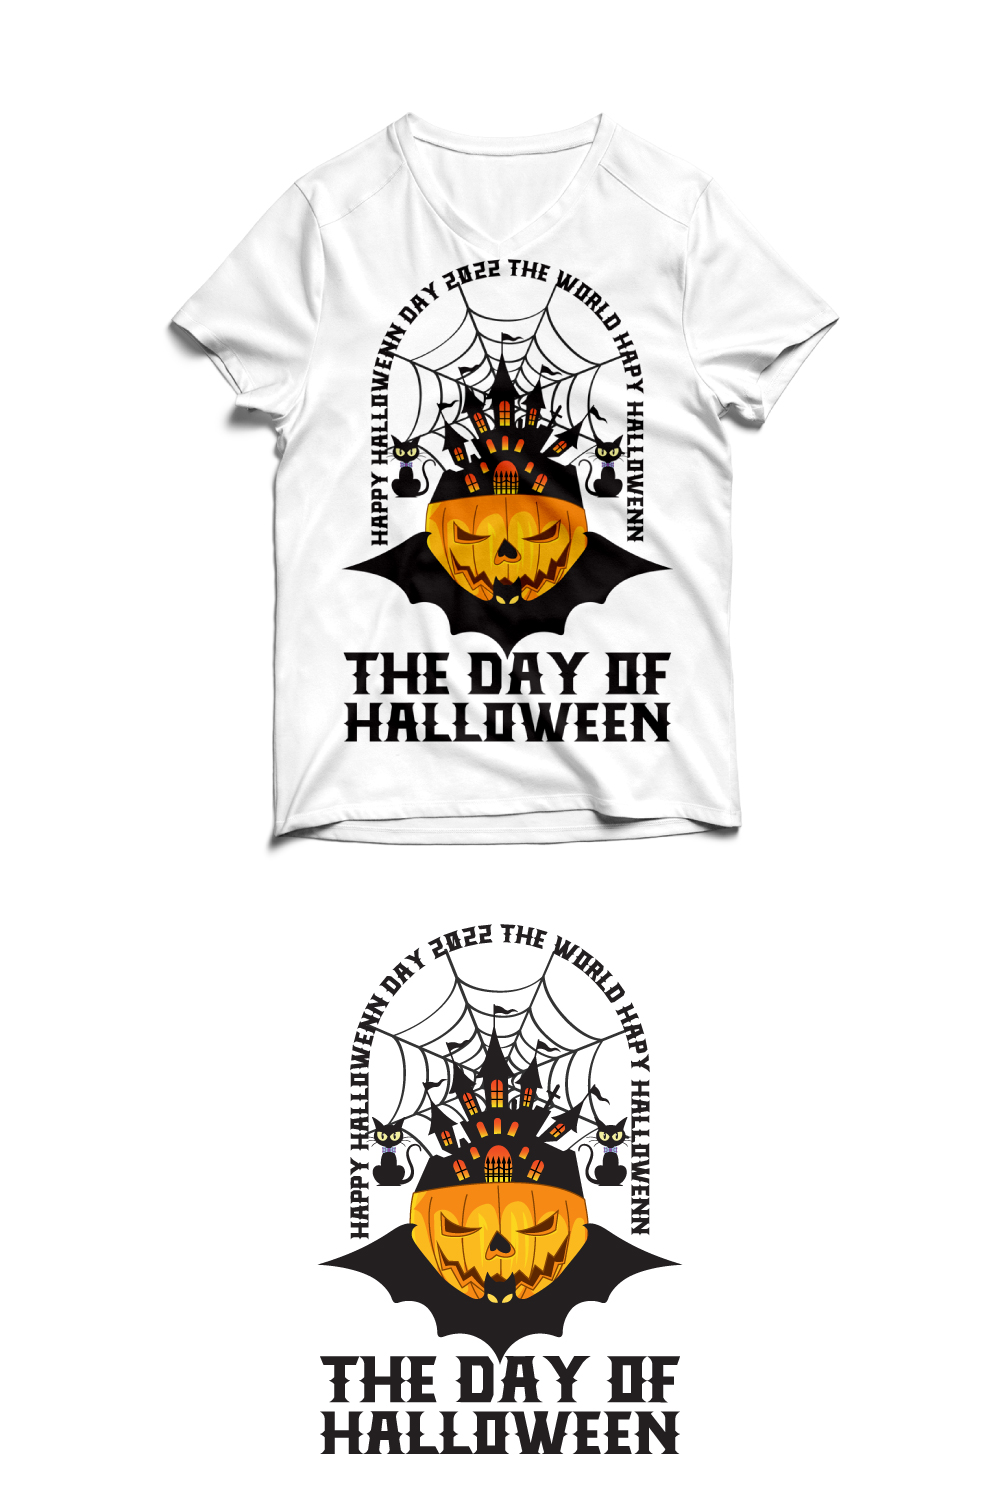 Happy Halloween Day T-shirt Design pinetrest image.